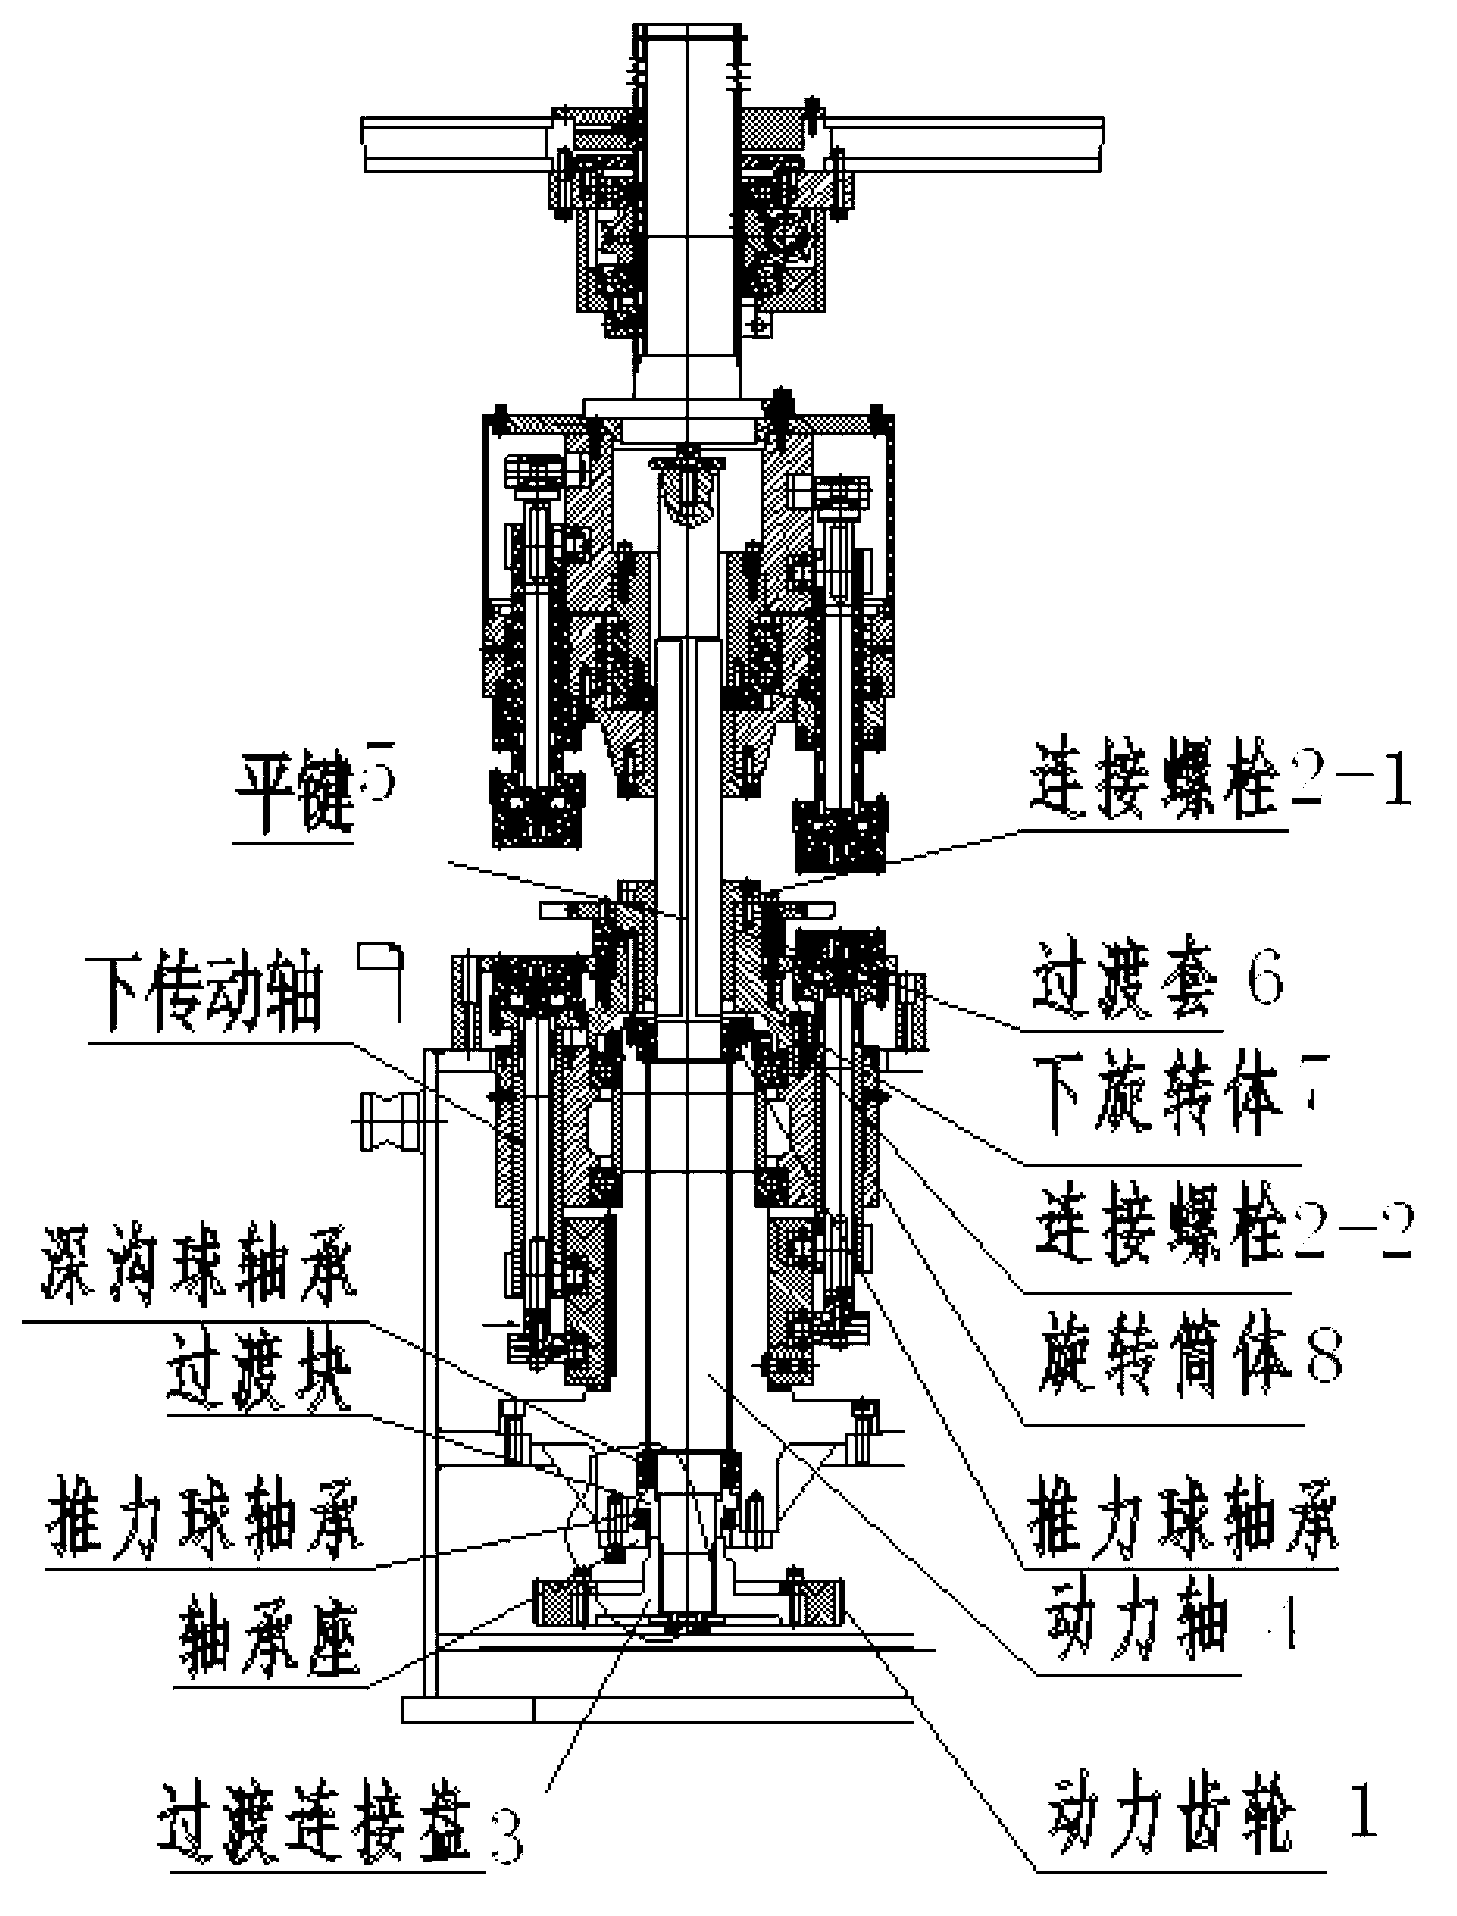 Novel transmission device of combined machine